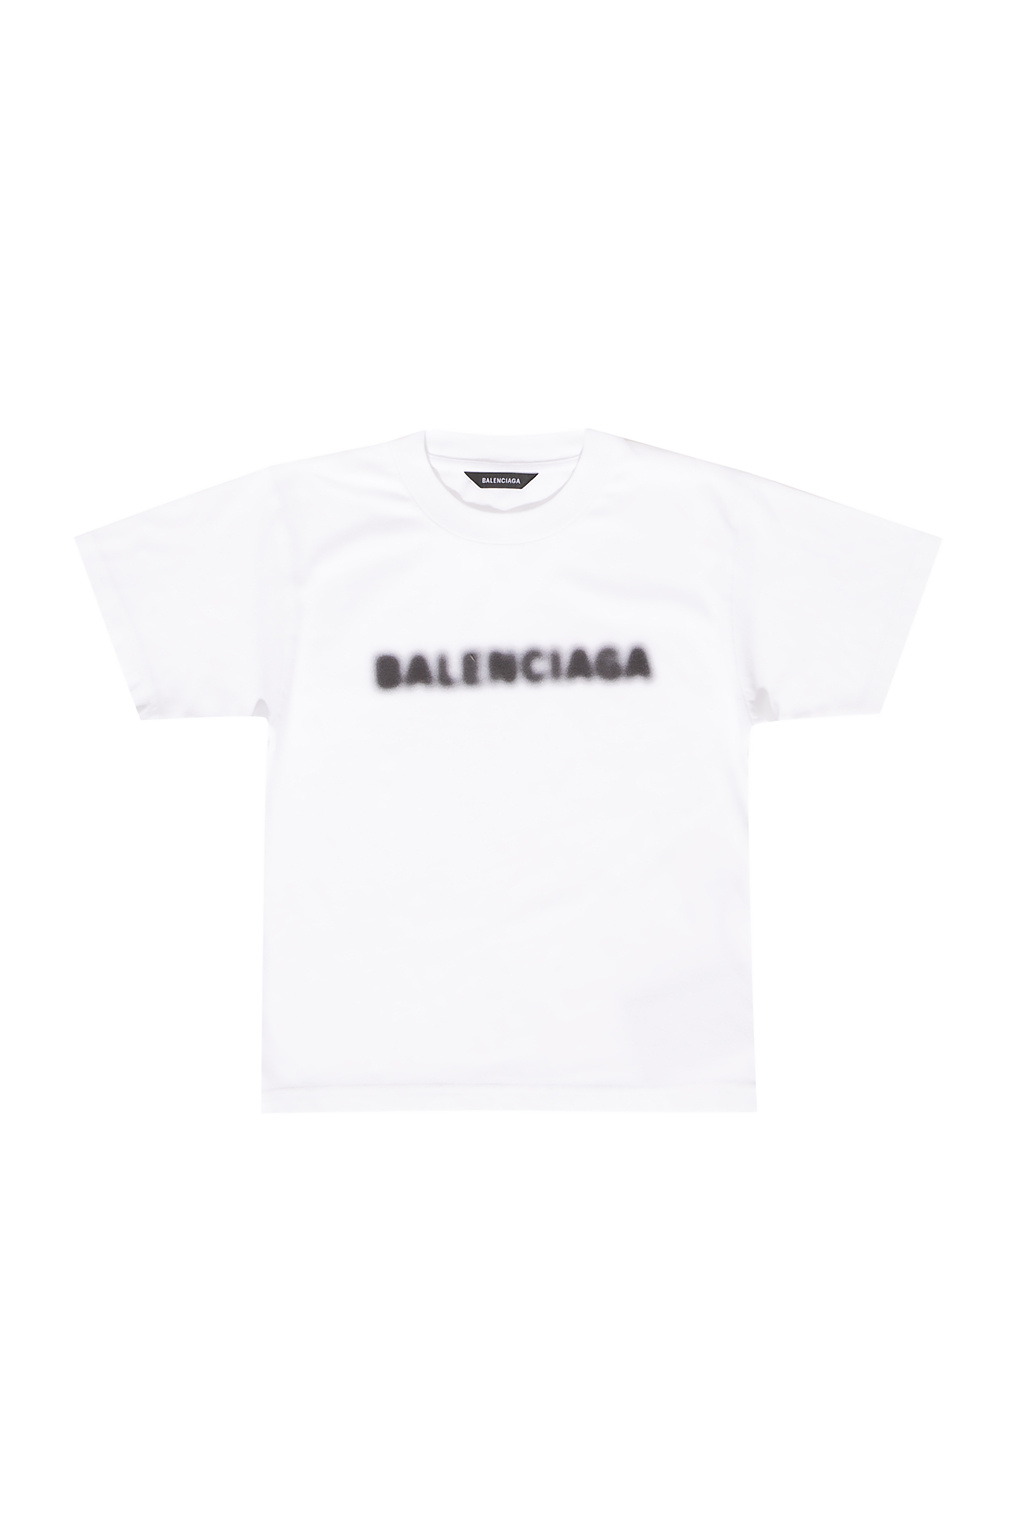 zwart - in printed RIPNDIP Balenciaga Kids shirt Up Square White - - hoodie T StclaircomoShops - Logo Kuwait